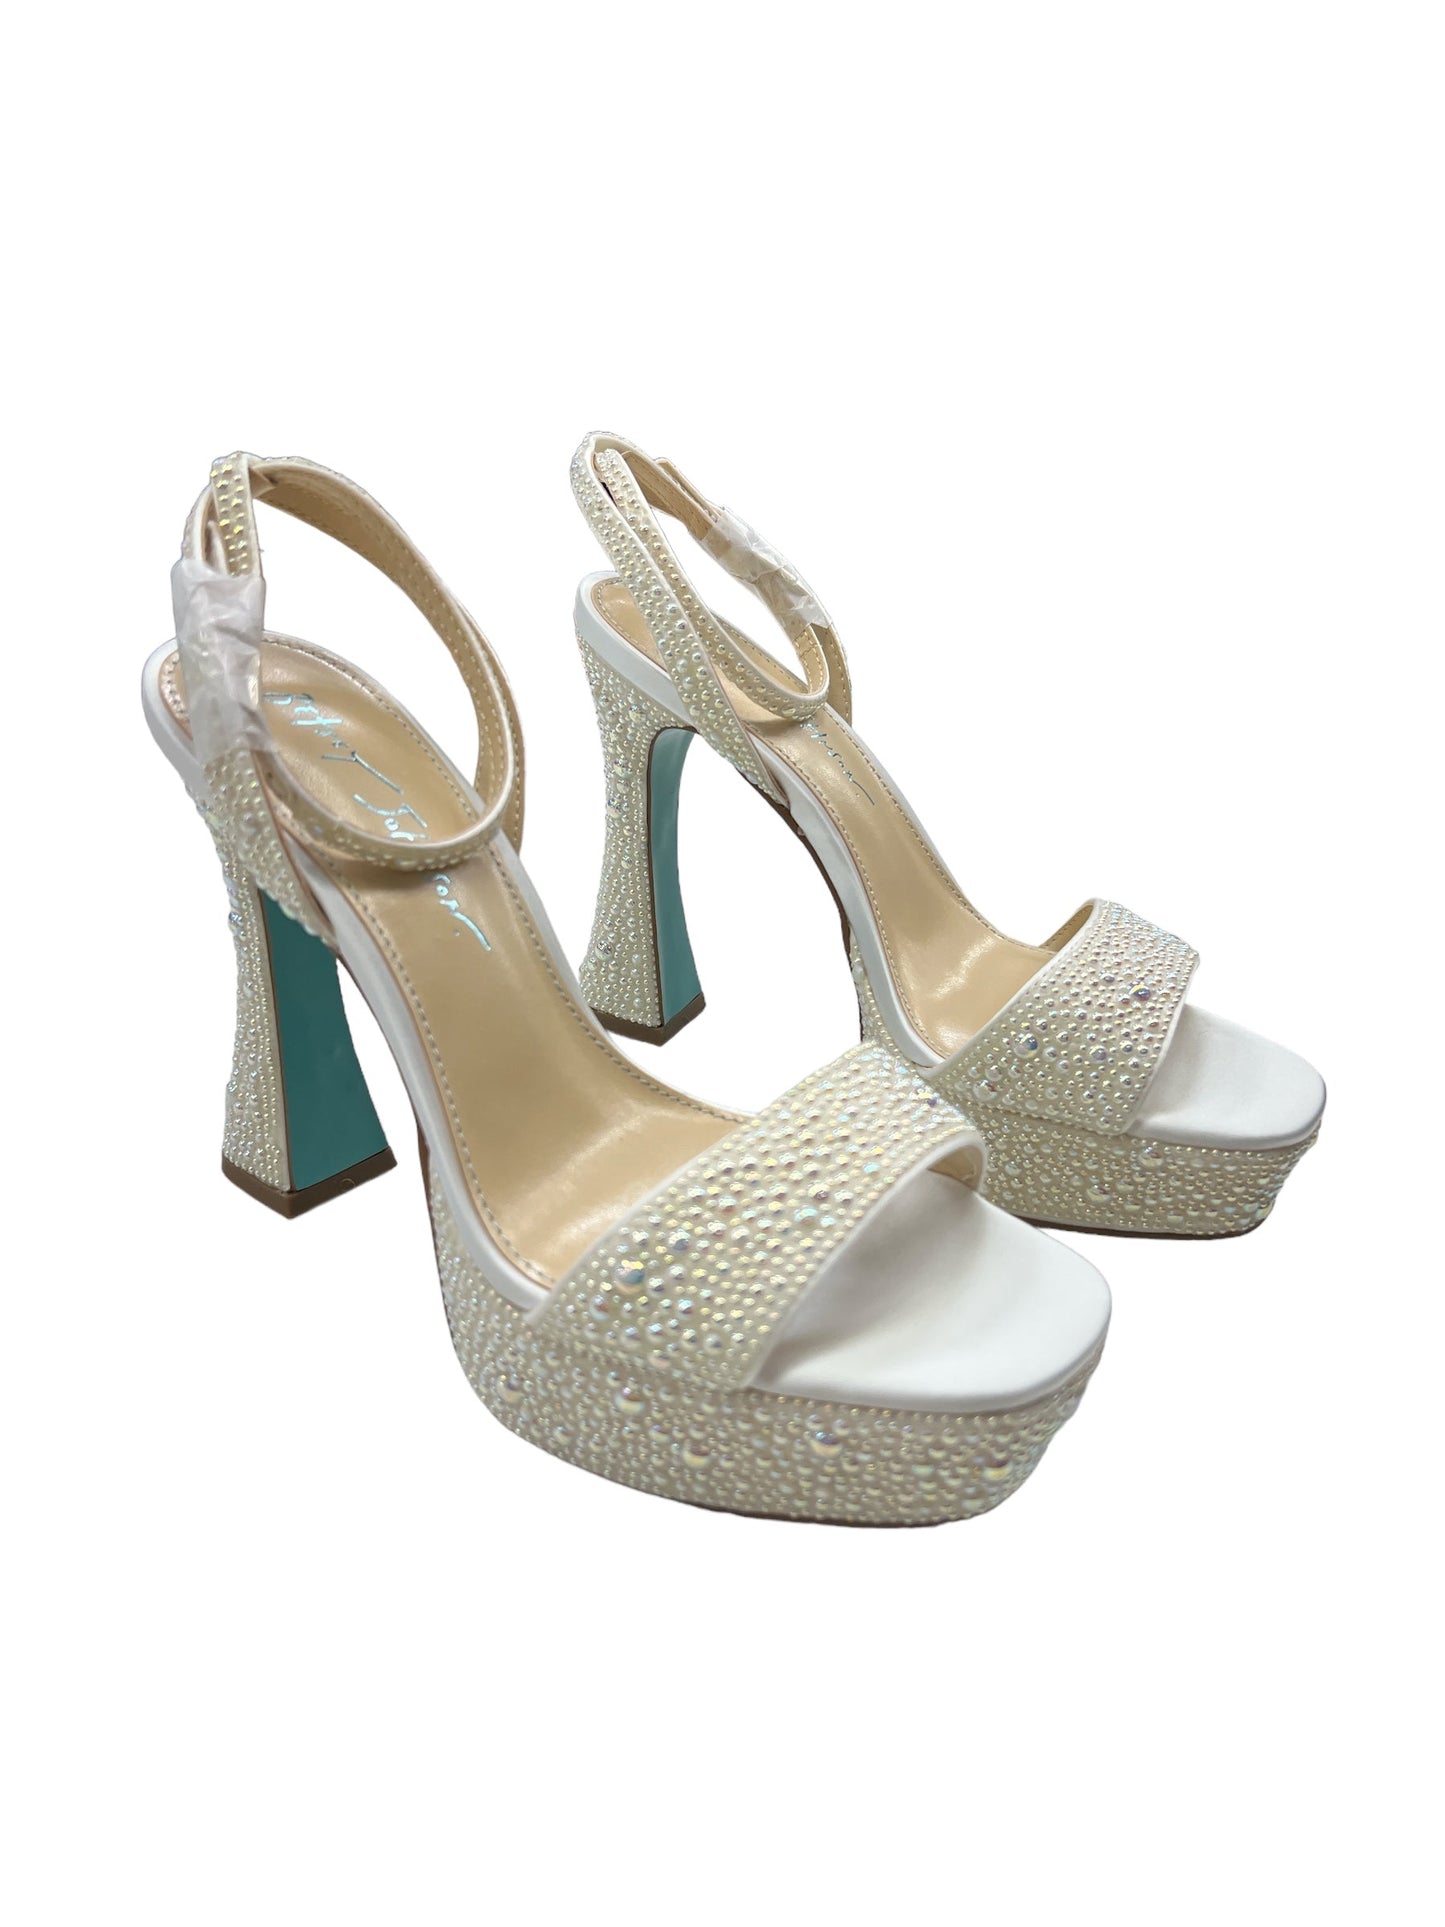 Ivory Shoes Heels Platform Betsey Johnson, Size 7.5